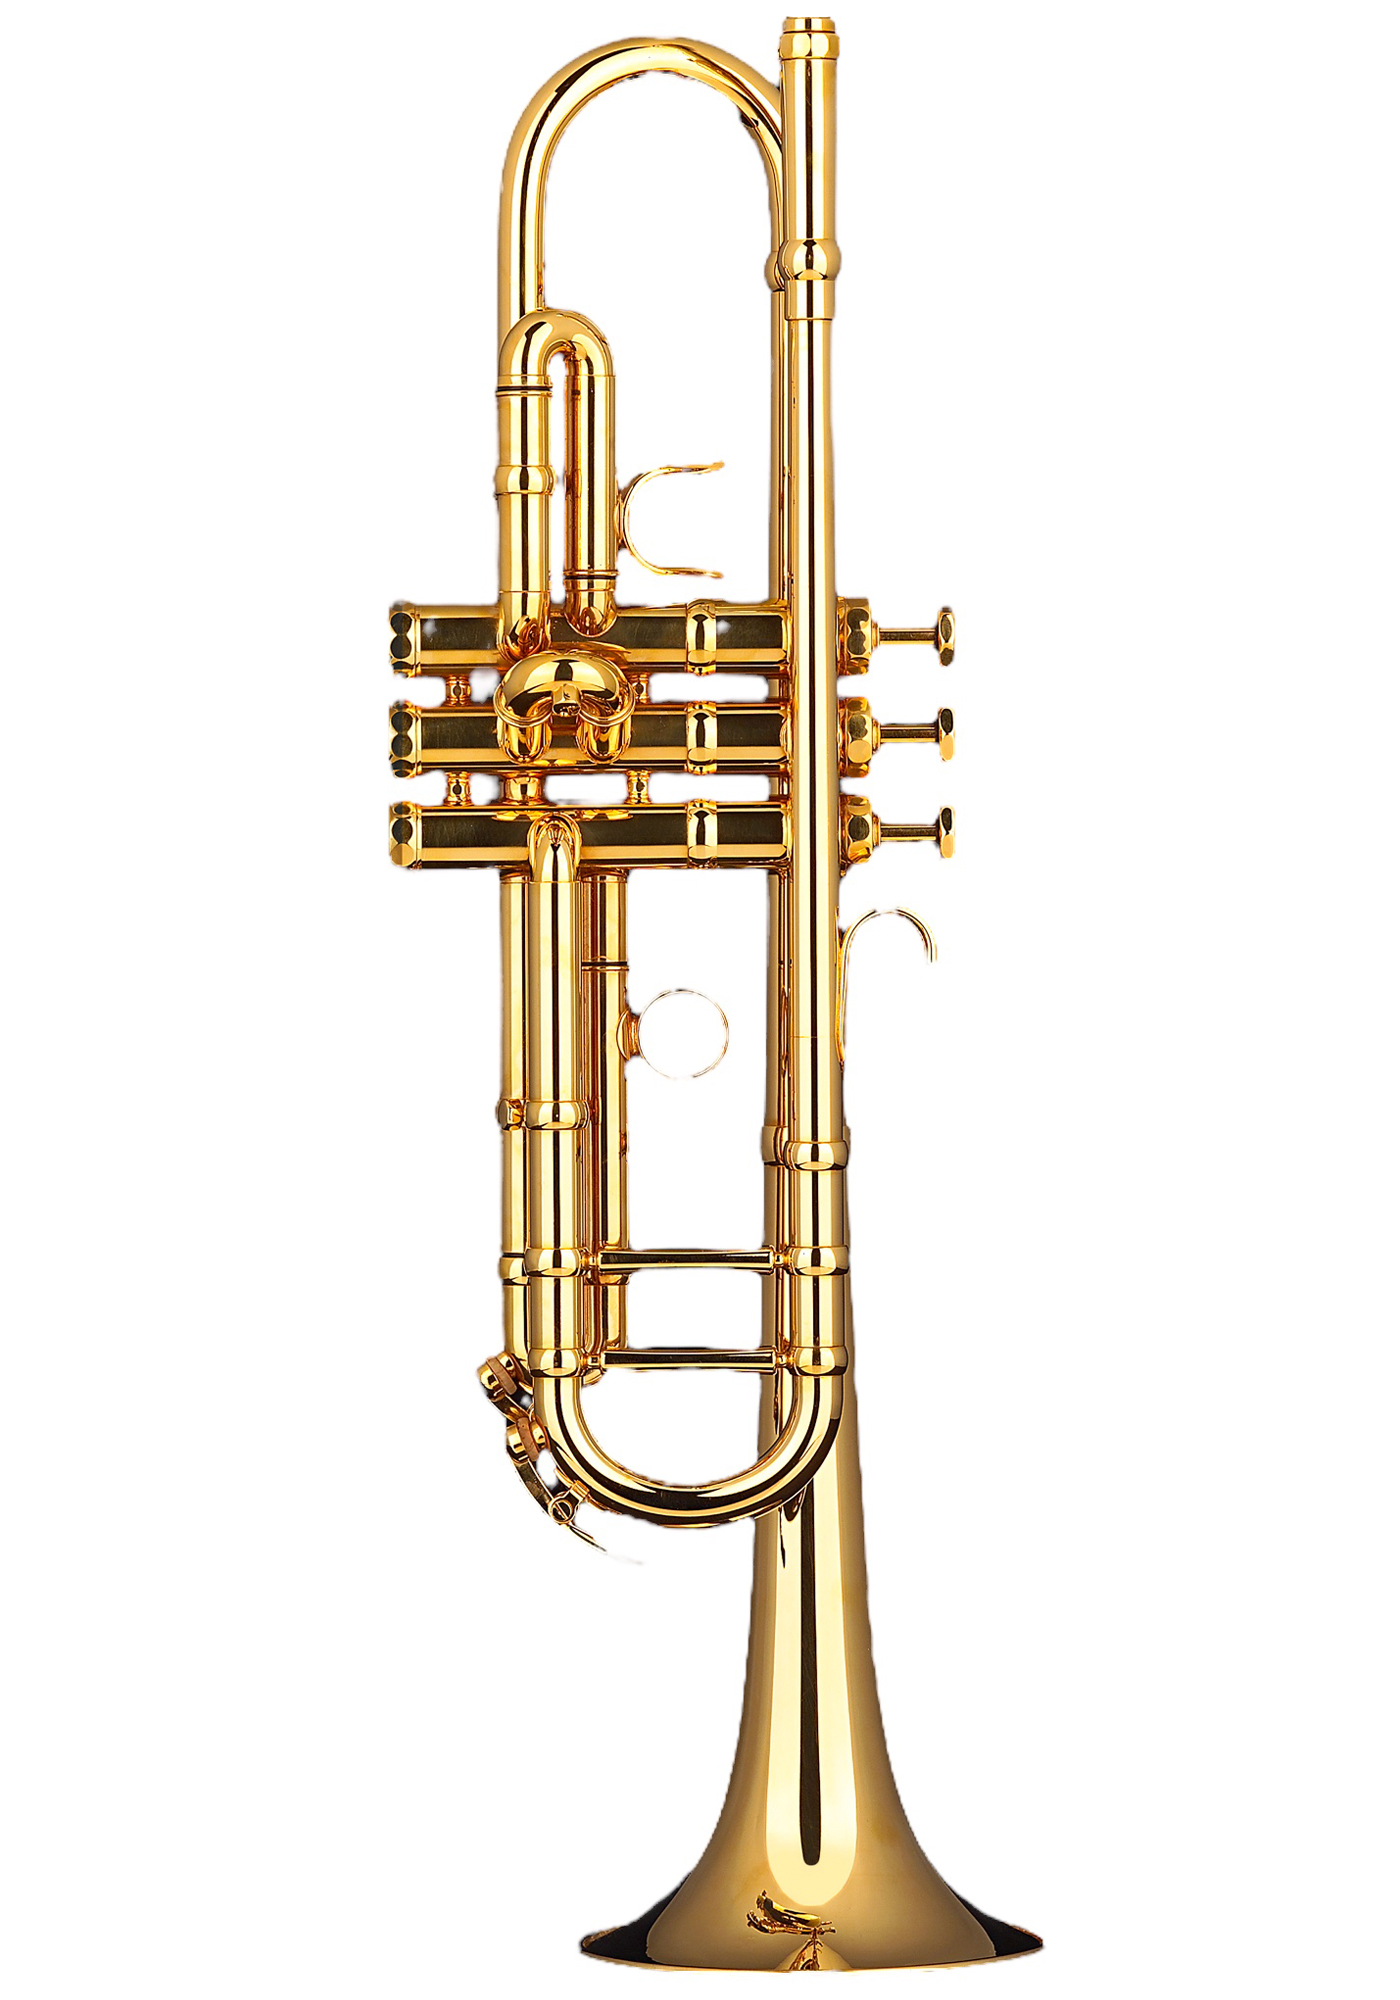 Schagerl Bb-Trumpet "AGLAEA" gold plated